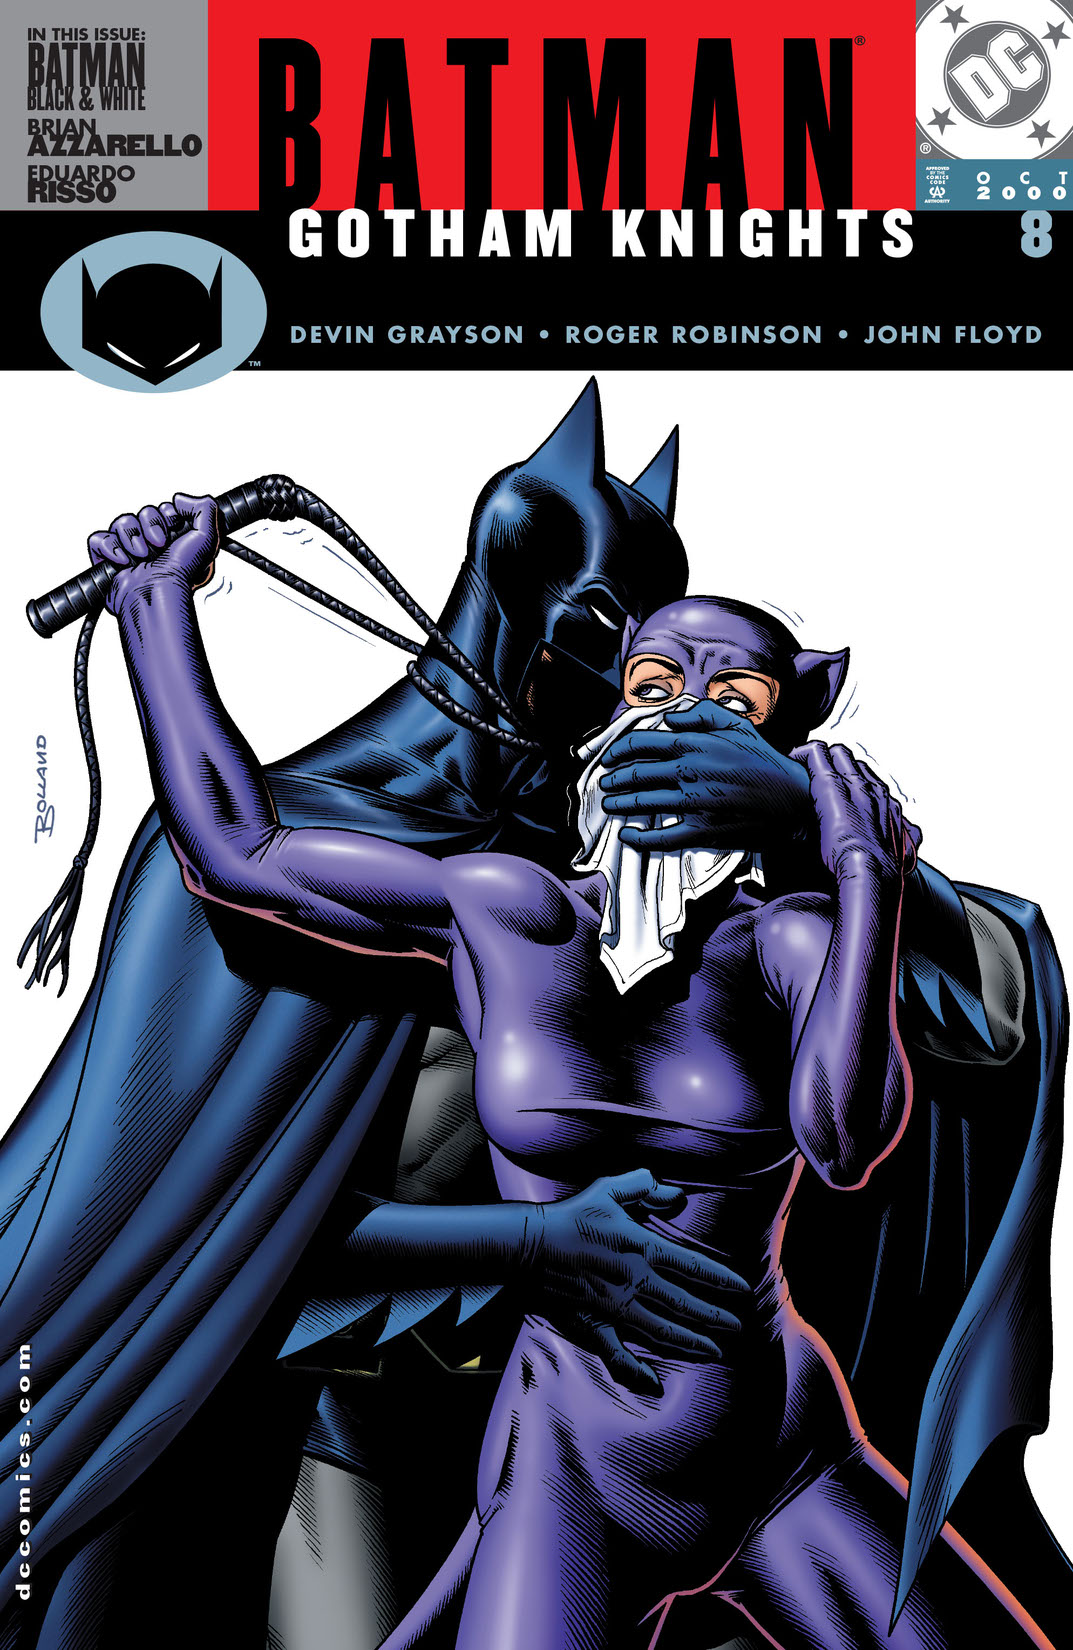 Batman: Gotham Knights #8 preview images